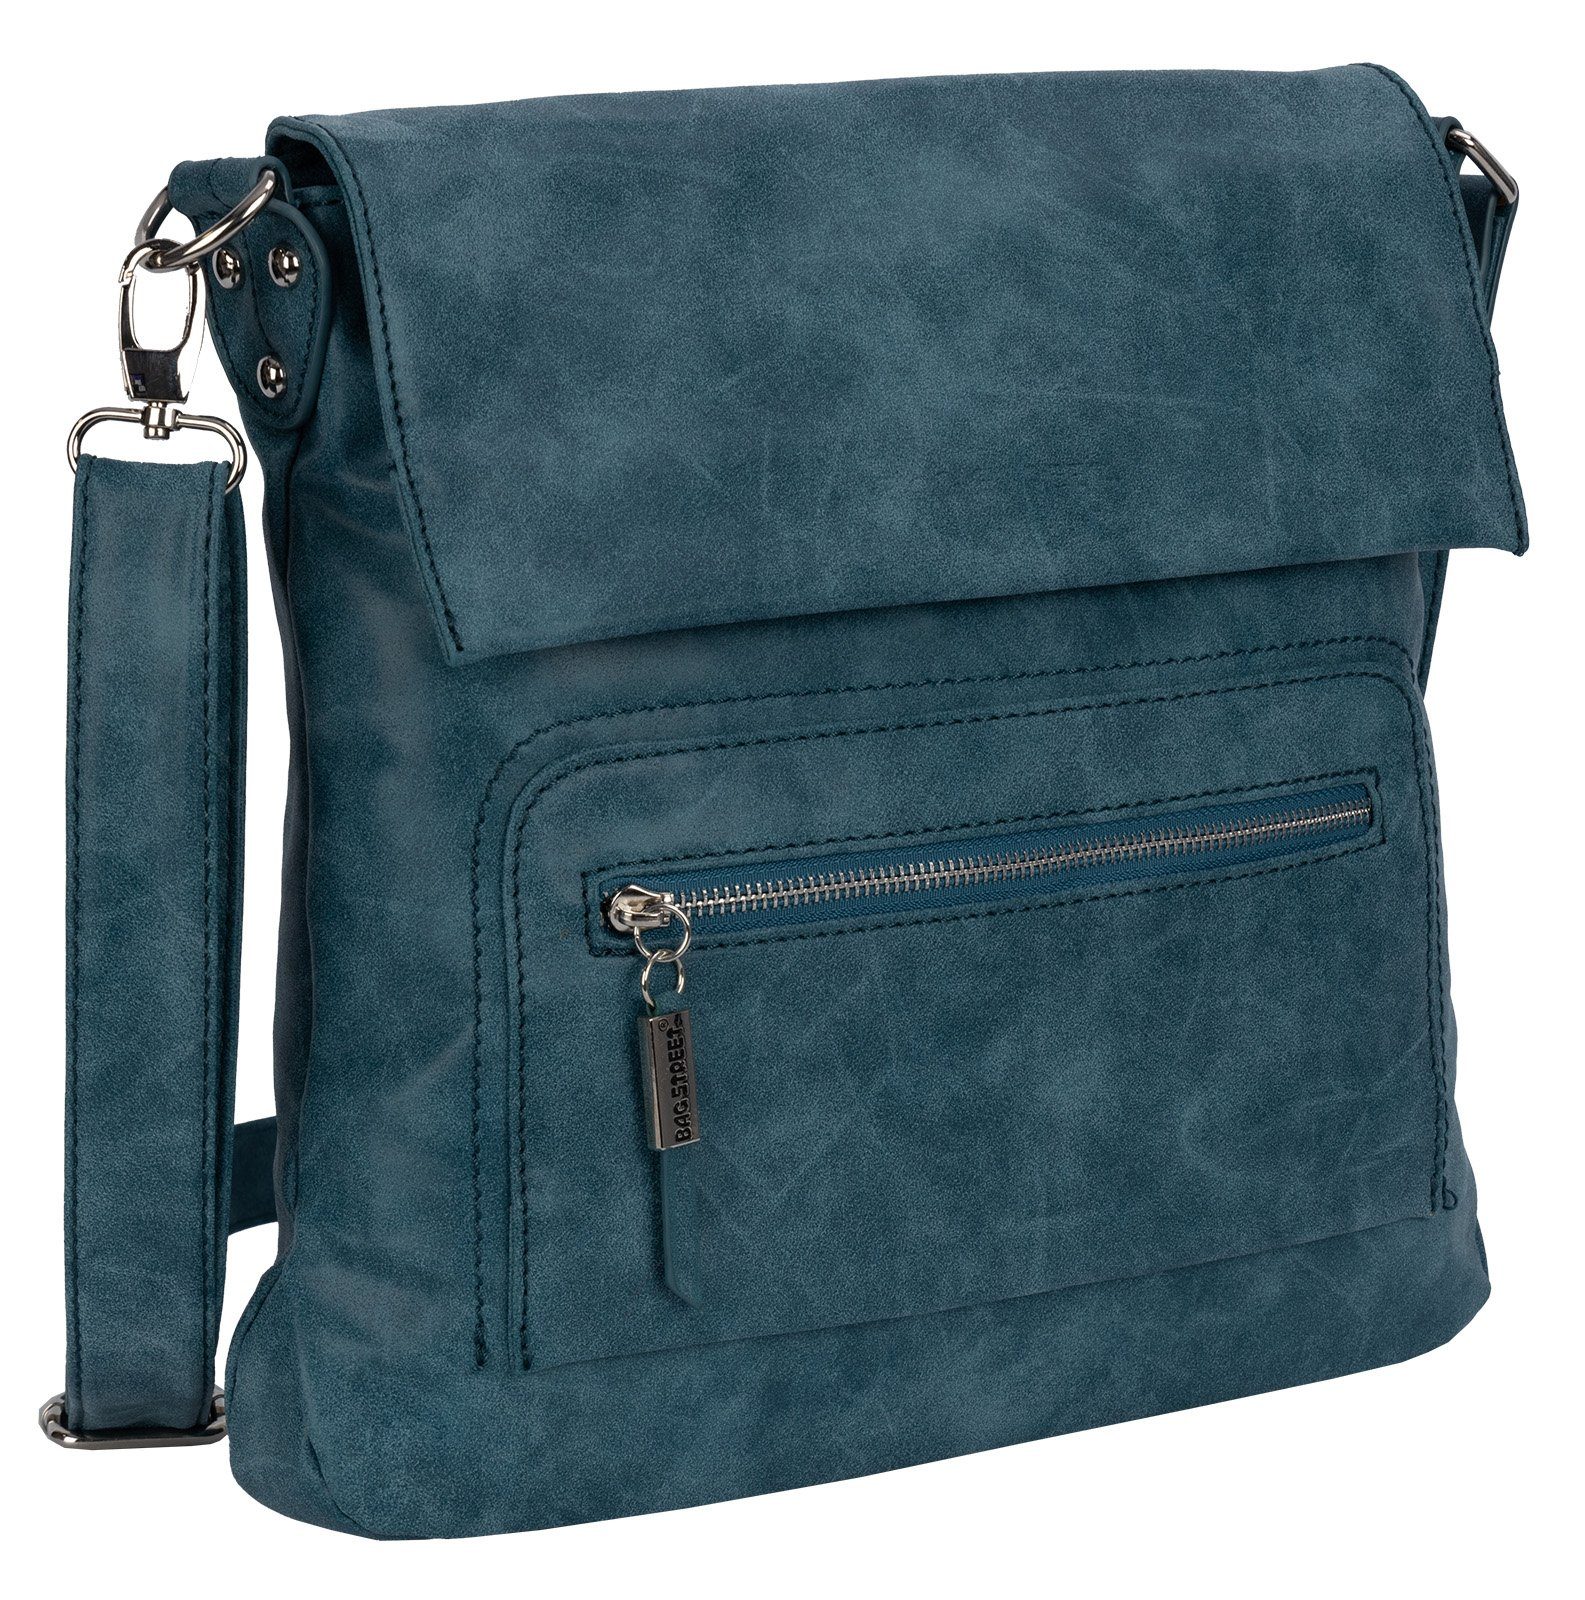 BAG STREET Schlüsseltasche Bag Street Damentasche Umhängetasche Handtasche Schultertasche T0103, als Schultertasche, Umhängetasche tragbar BLAU